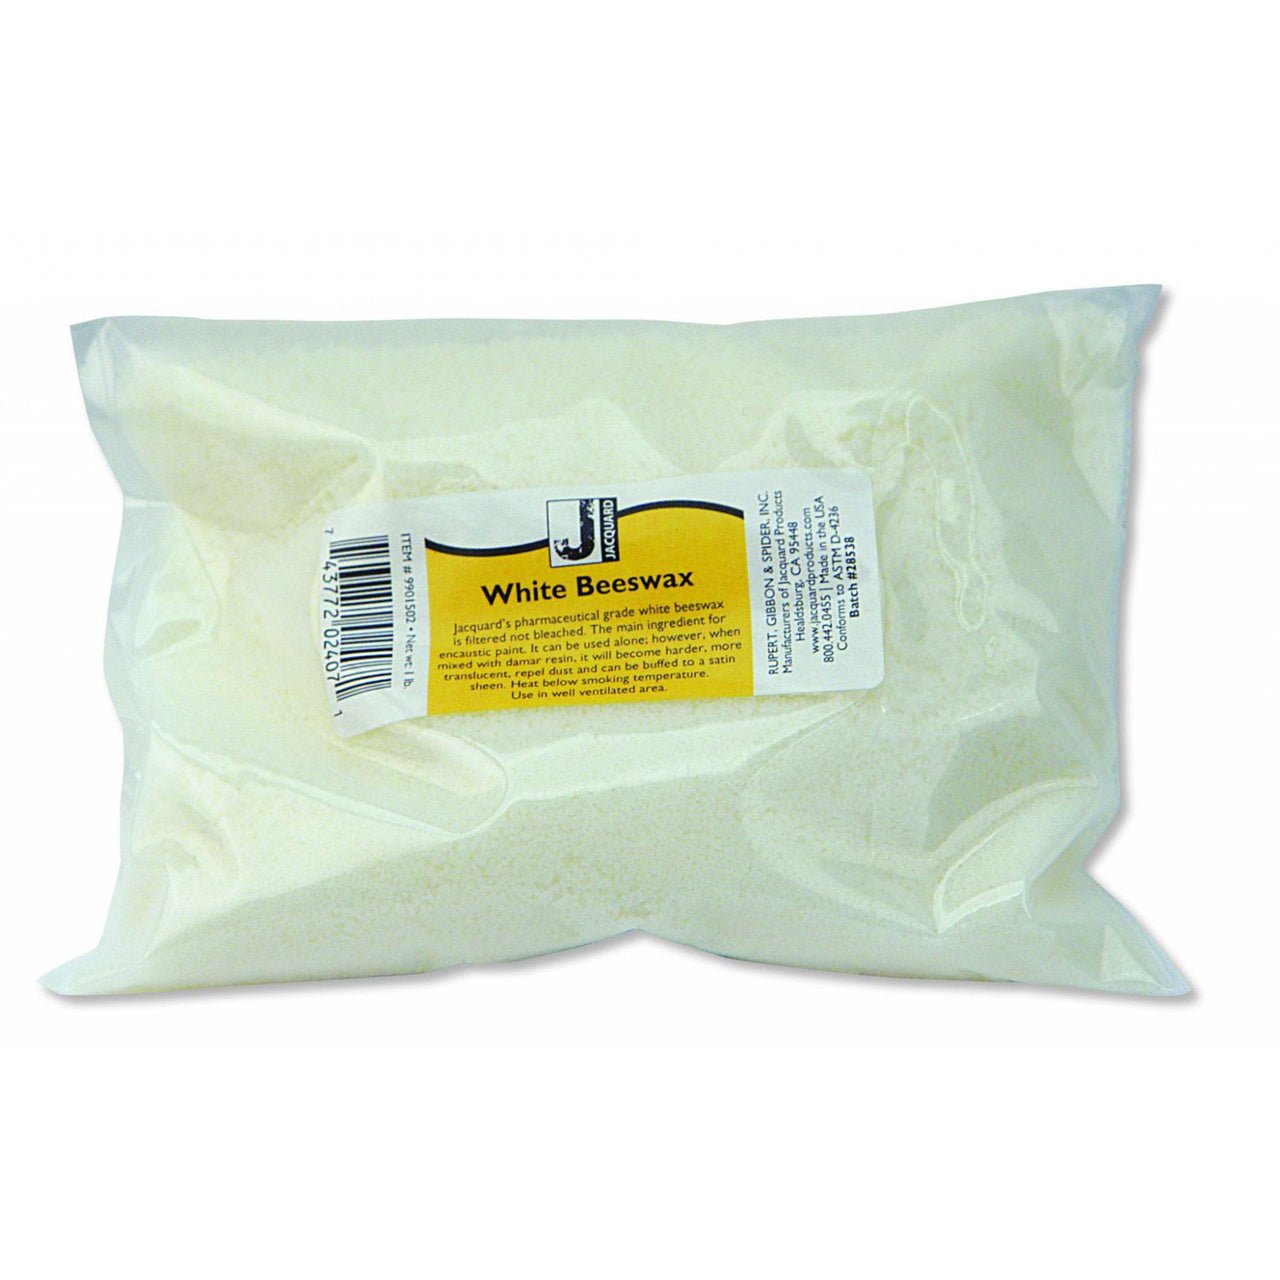 Jacquard White Beeswax - 1 pound - merriartist.com